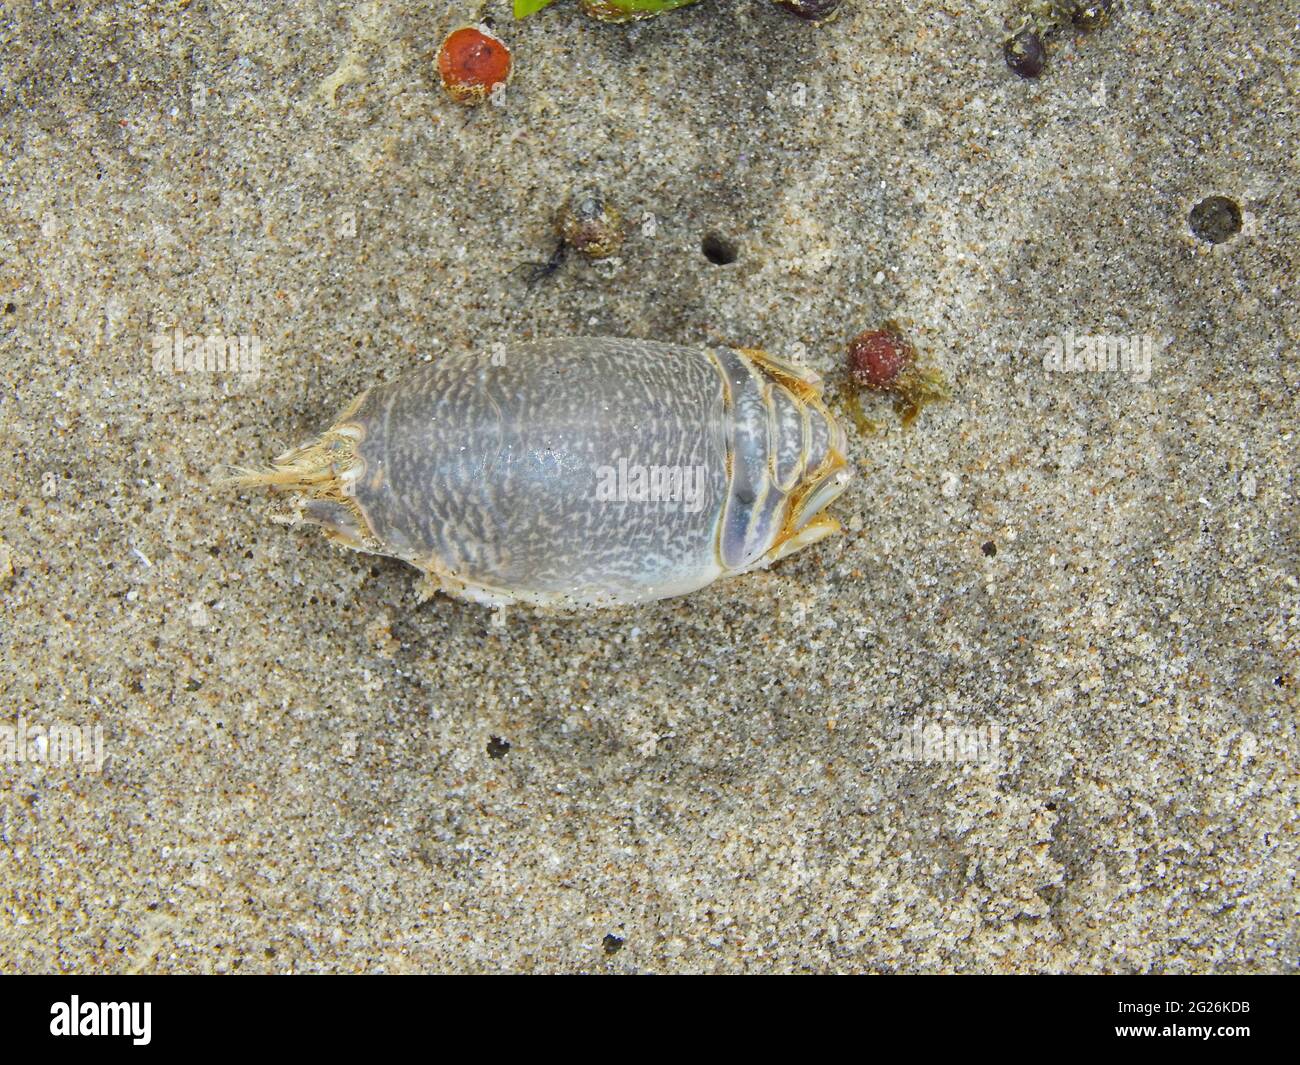 Emerita analoga or mole crabs on the Manzanilla beach shore in in Trinidad. Stock Photo